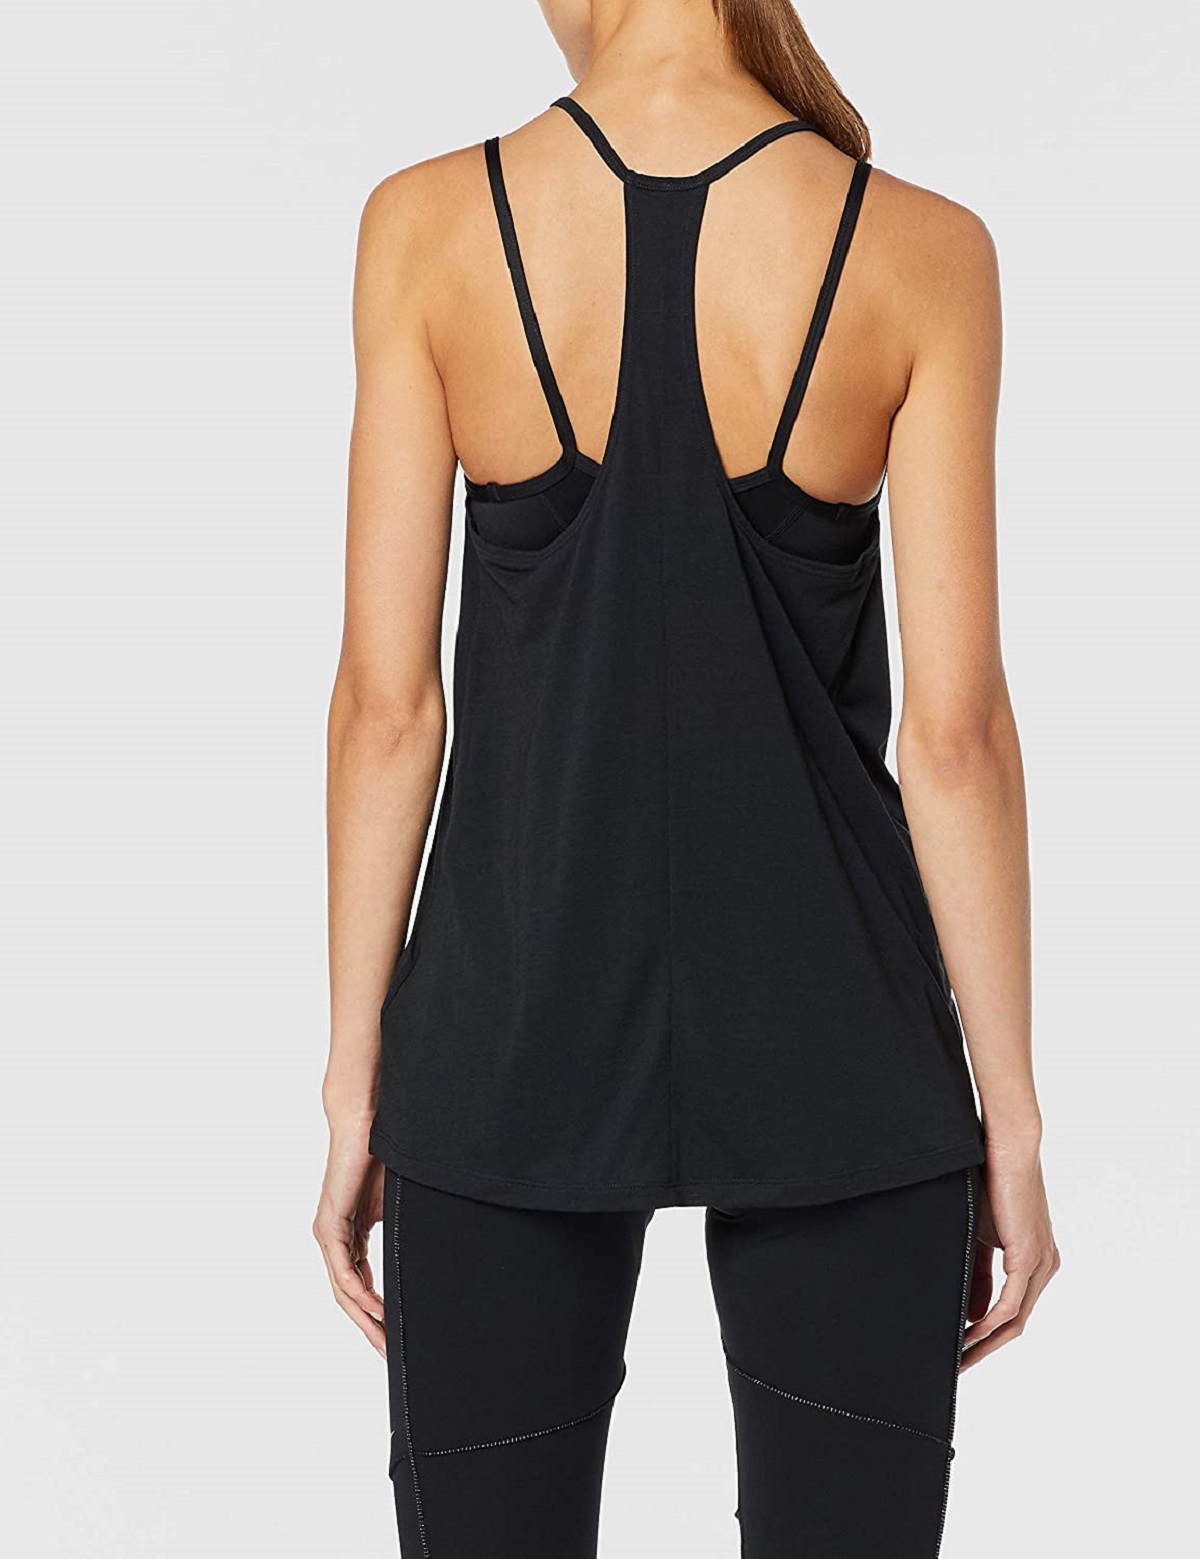 Nike Women's Dri-FIT Built-in light-support sports bra Training Tank Top (XS, Black) - image 2 of 3